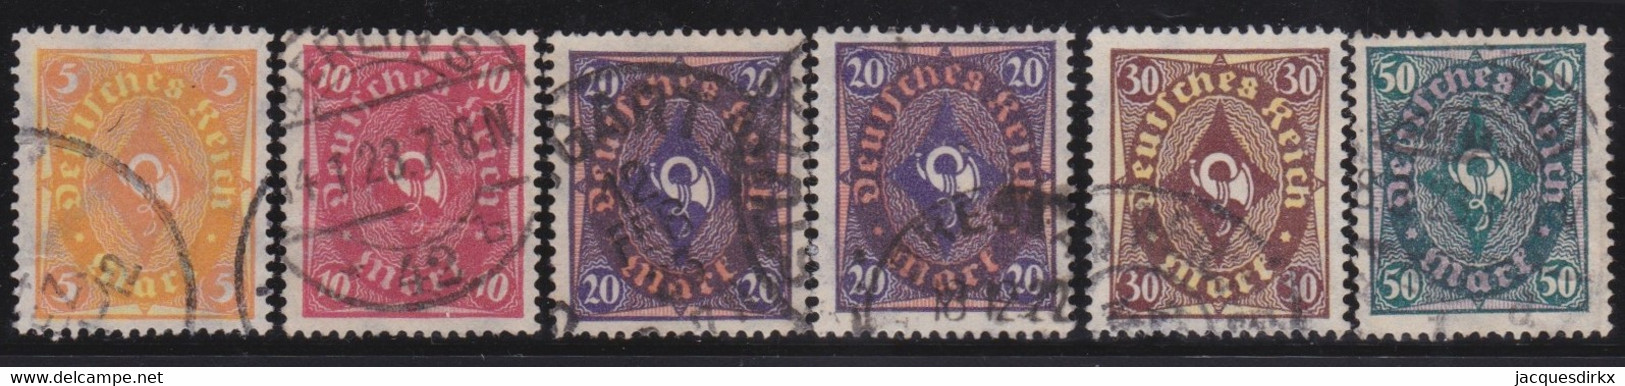 Deutsches Reich   .    Michel   .   205/209      .    O    .   Gestempelt   .    /    .   Cancelled - Used Stamps